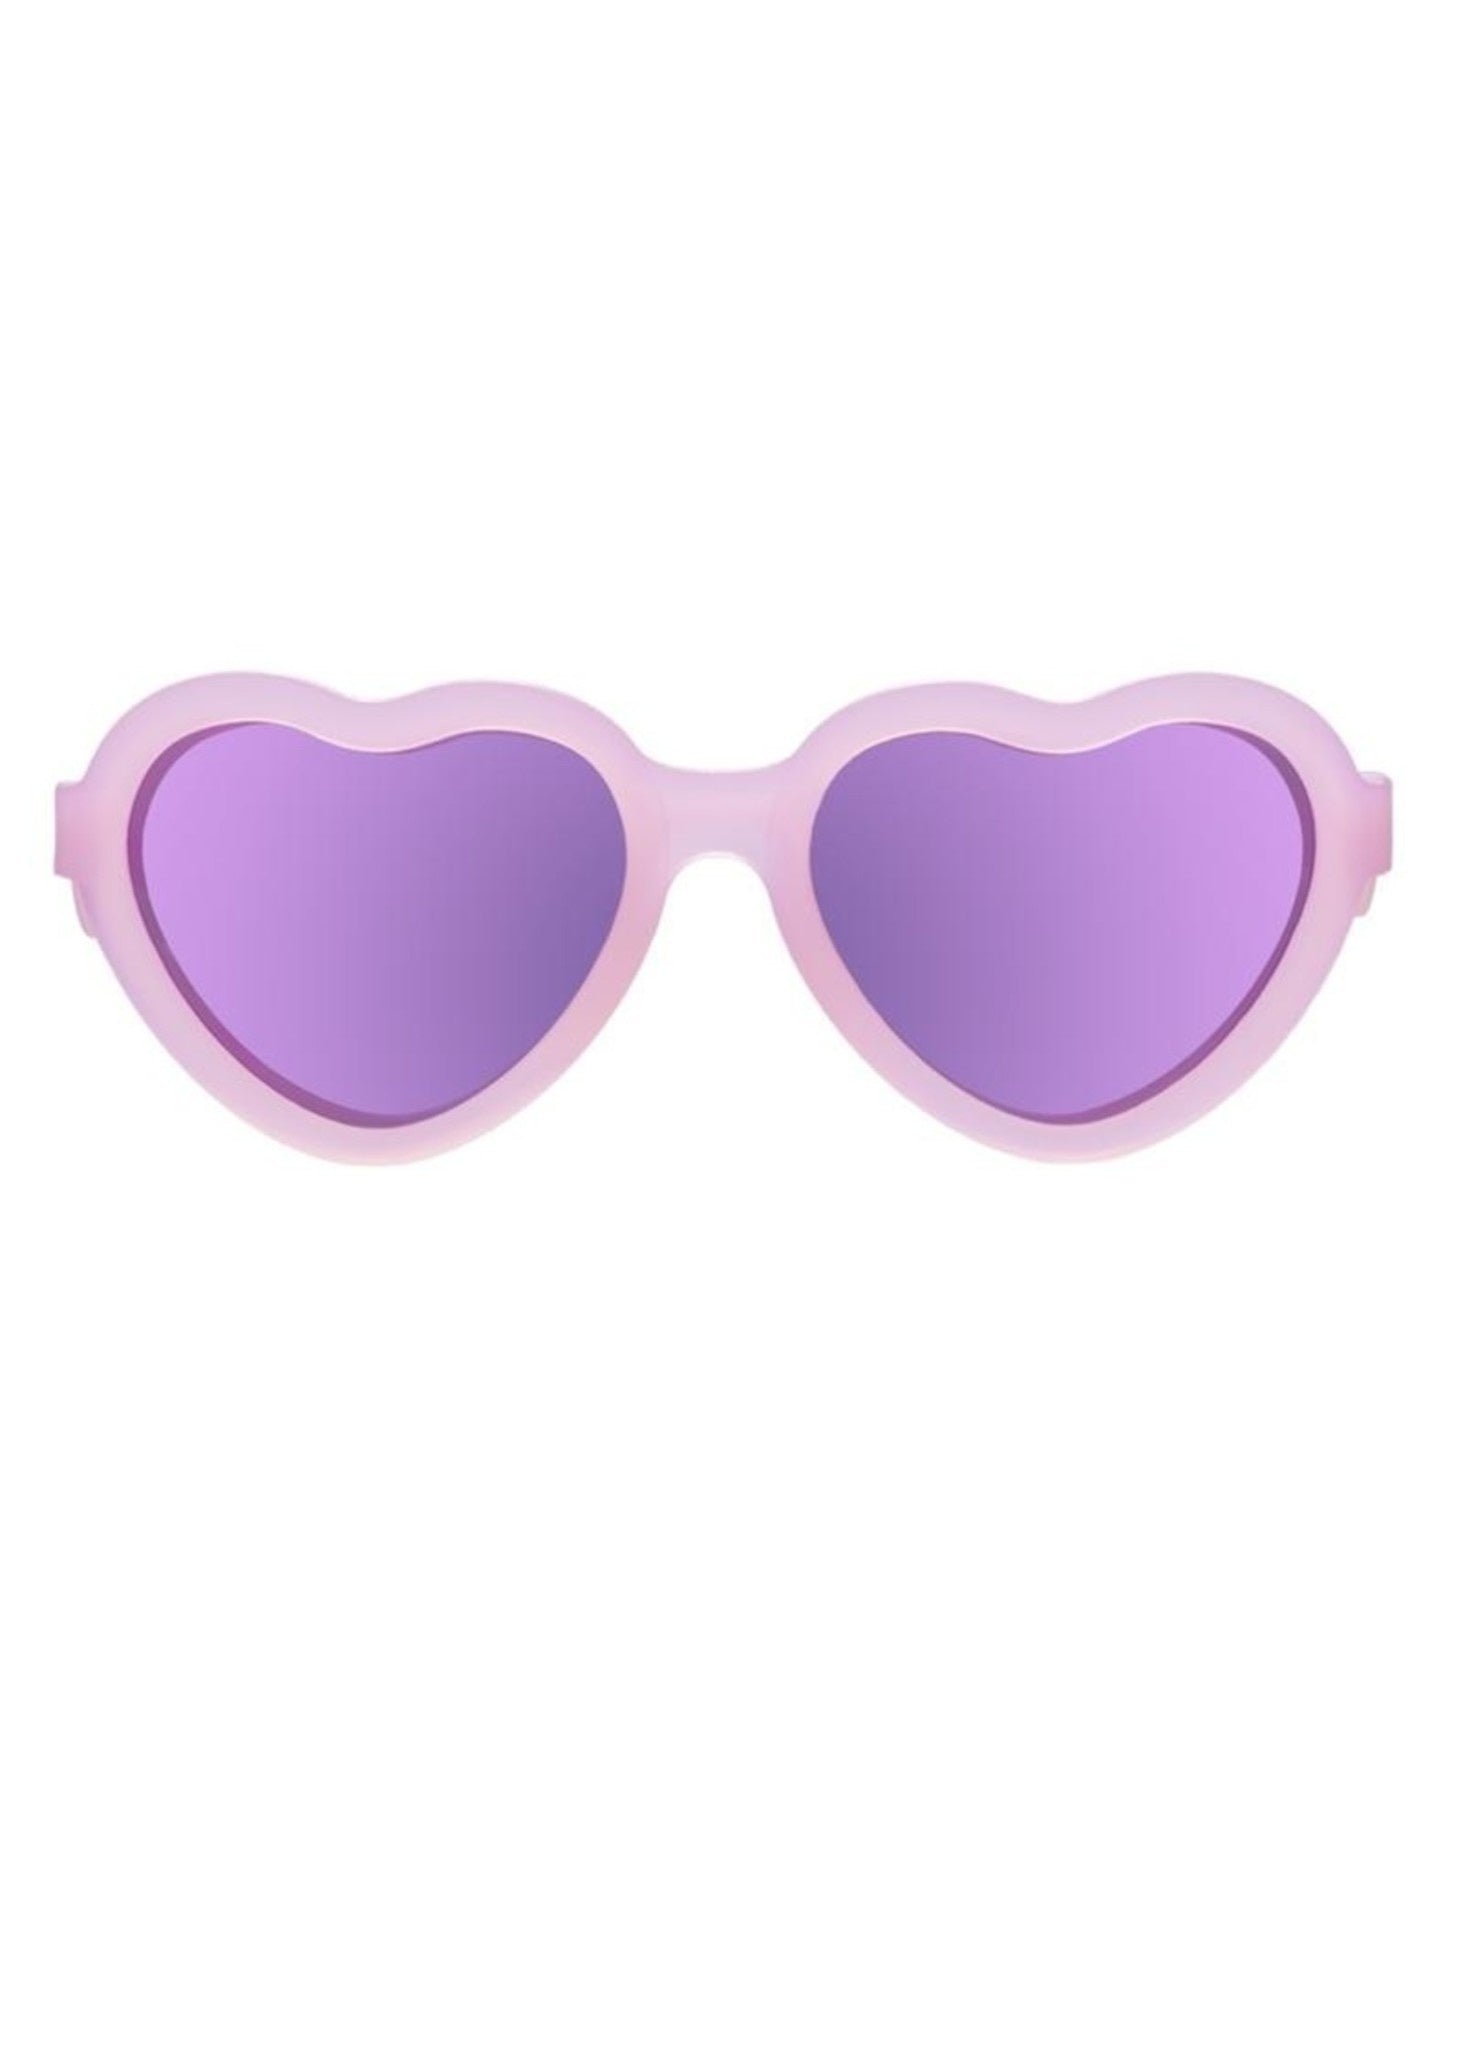 Babiators polarized Heart Sunglasses 6+ The Influencer(Pink)